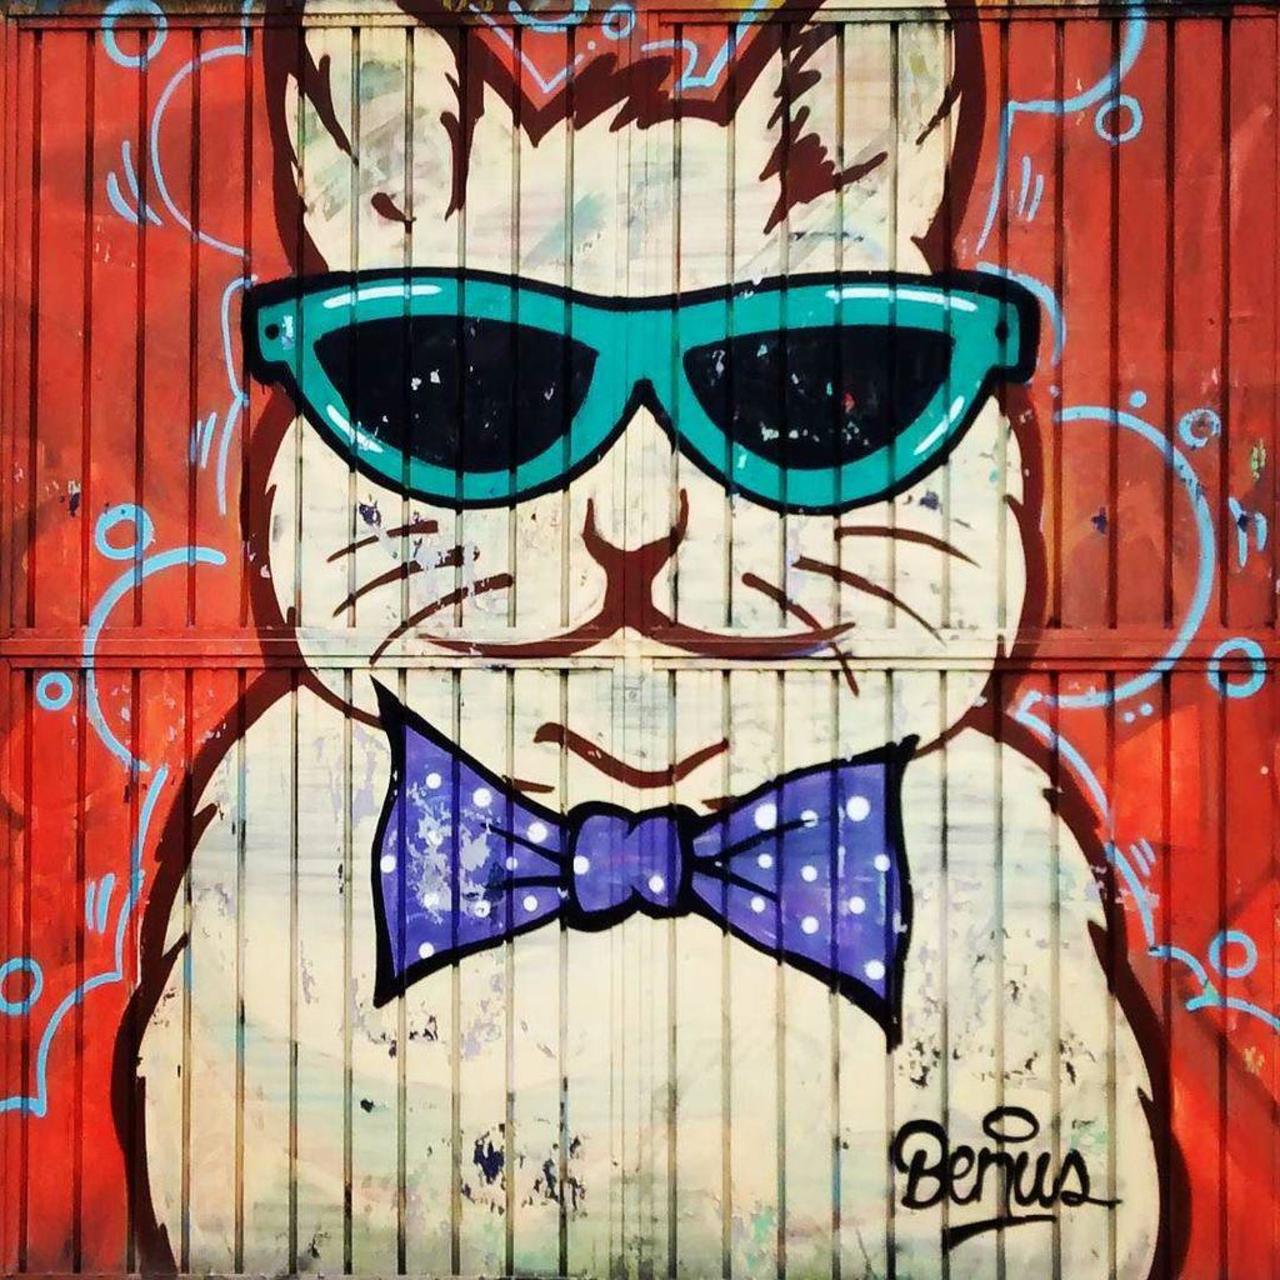 
#gato #cat #neko
#graffiti #grafite #streetart 
#streetartmexico #mexicocity by vherner http://t.co/8Ulp7xlB5S